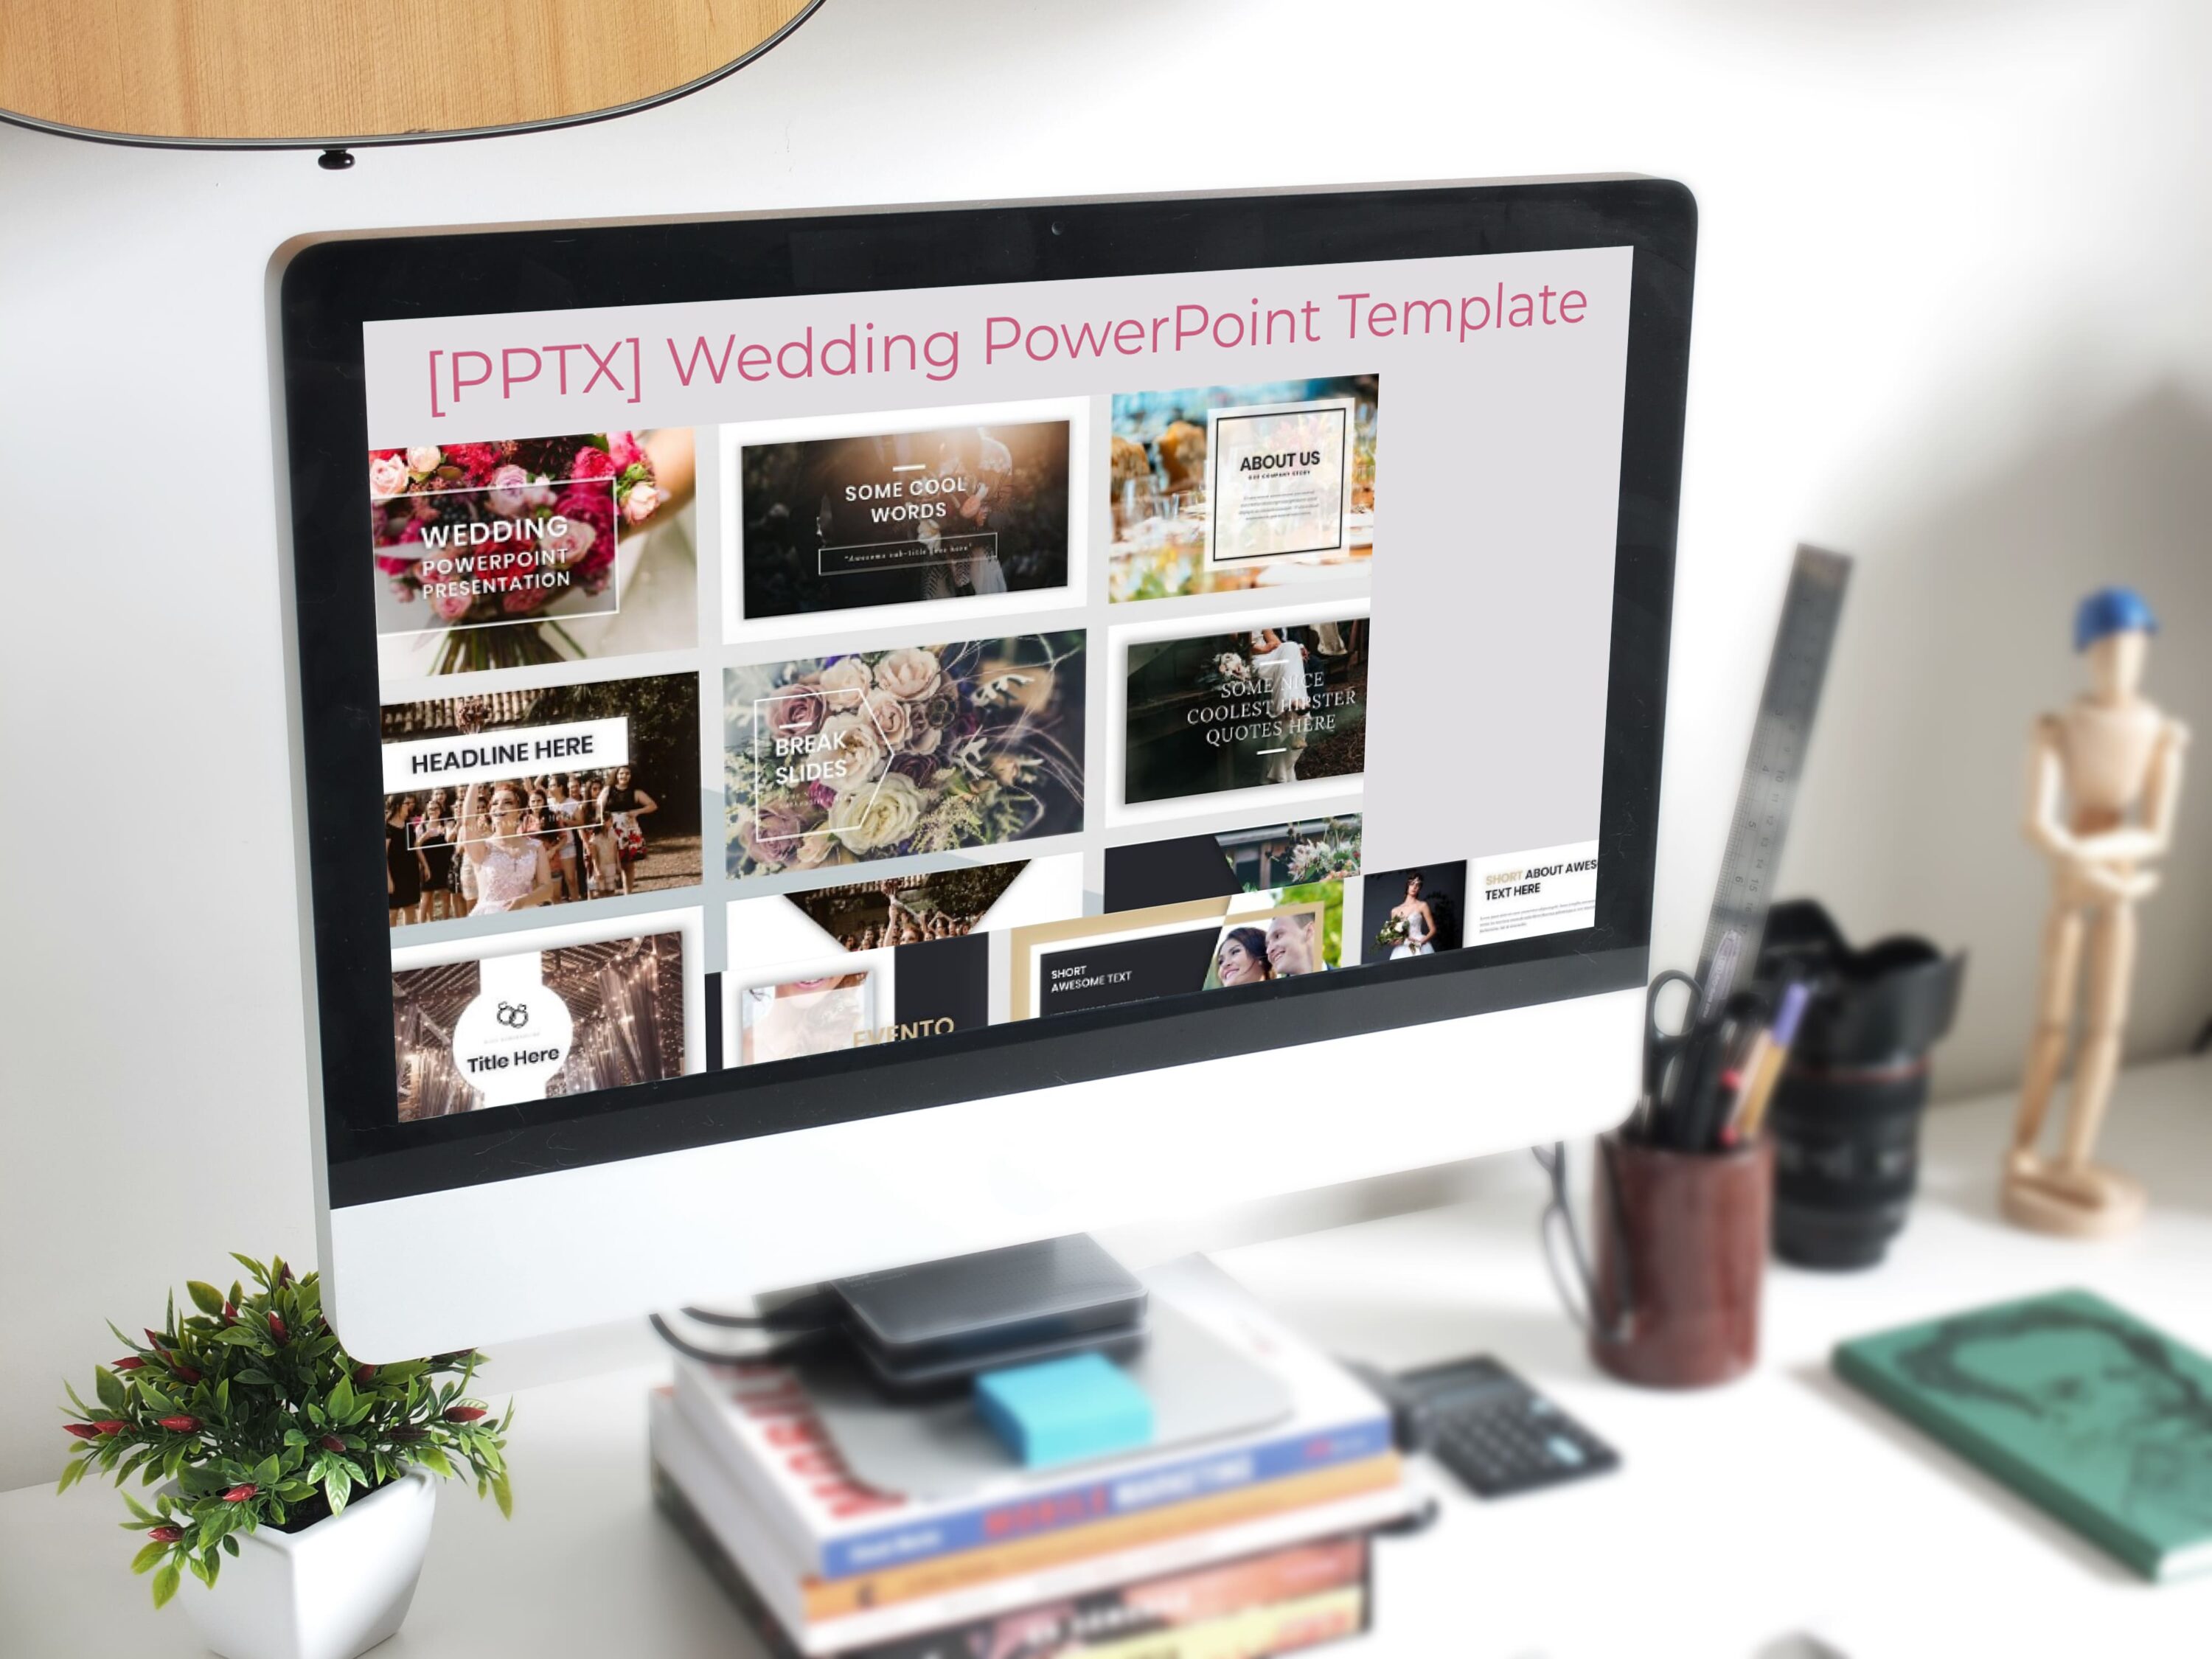 [PPTX] Wedding PowerPoint Template - desktop.